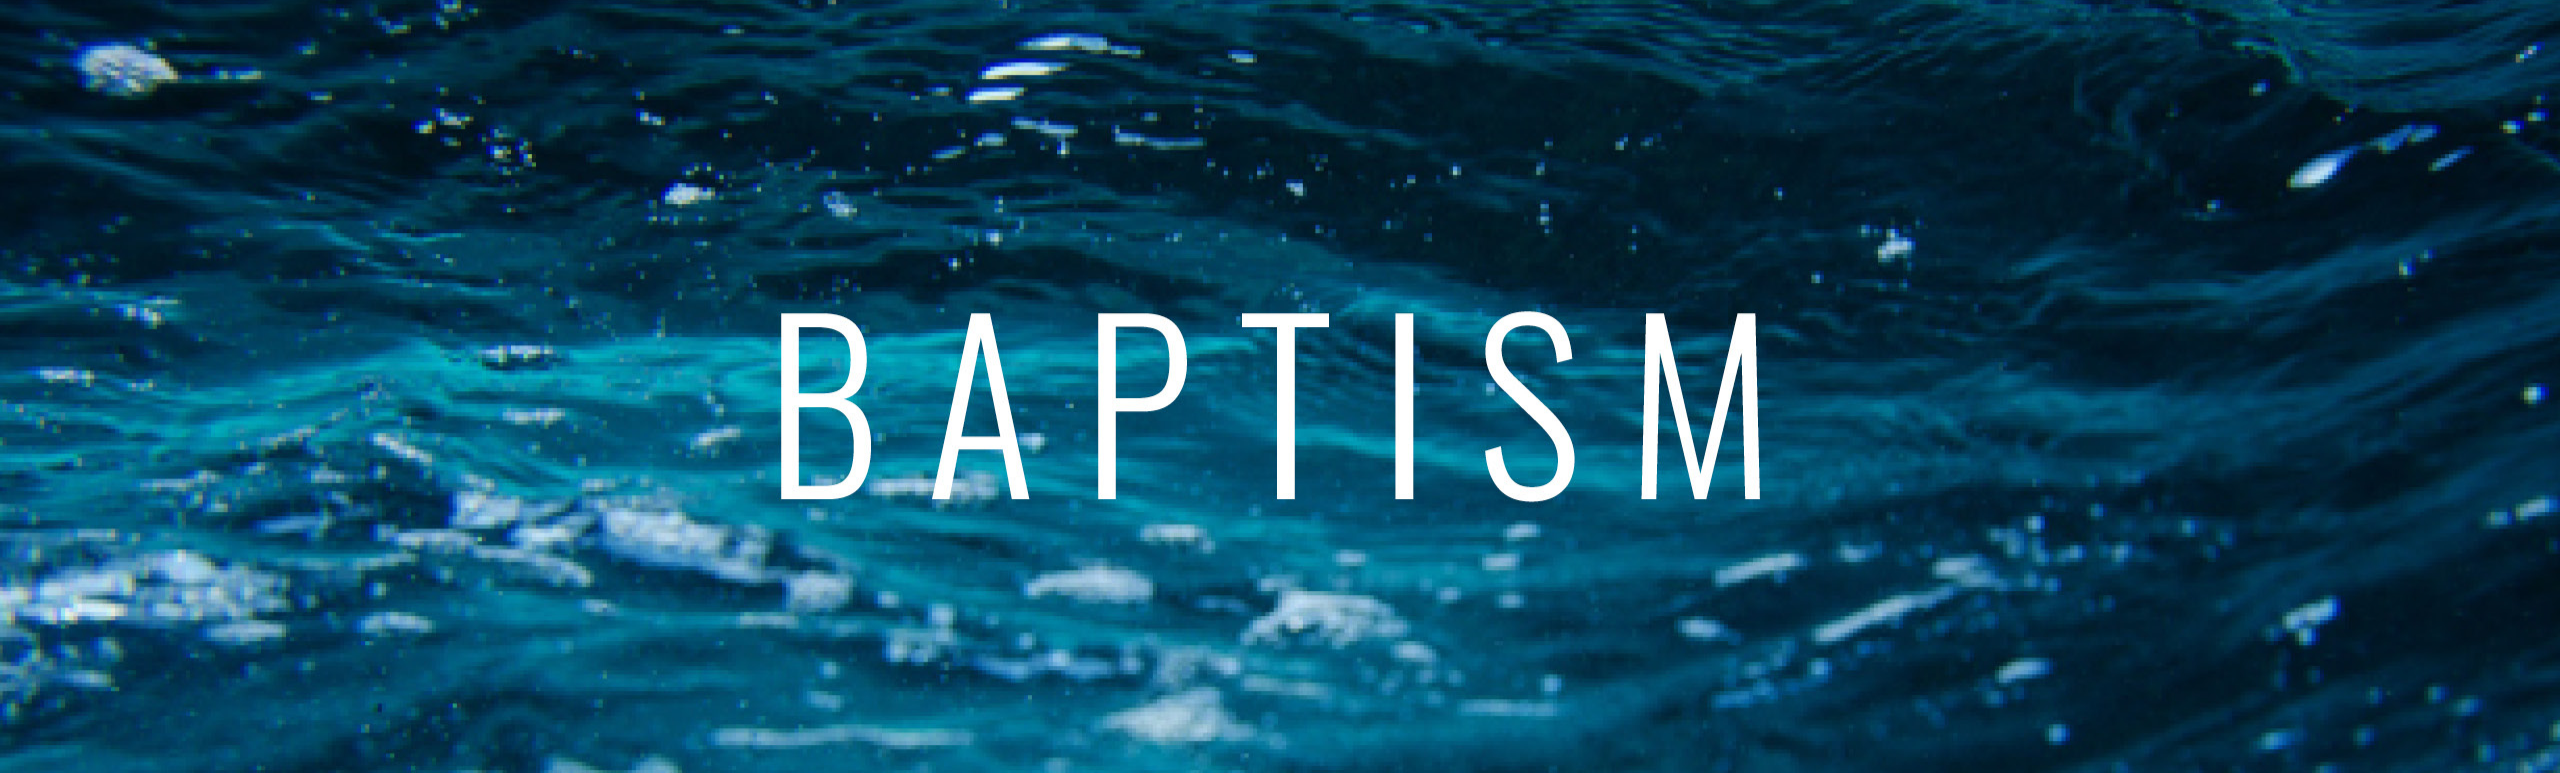 Baptism – Mobile Banners